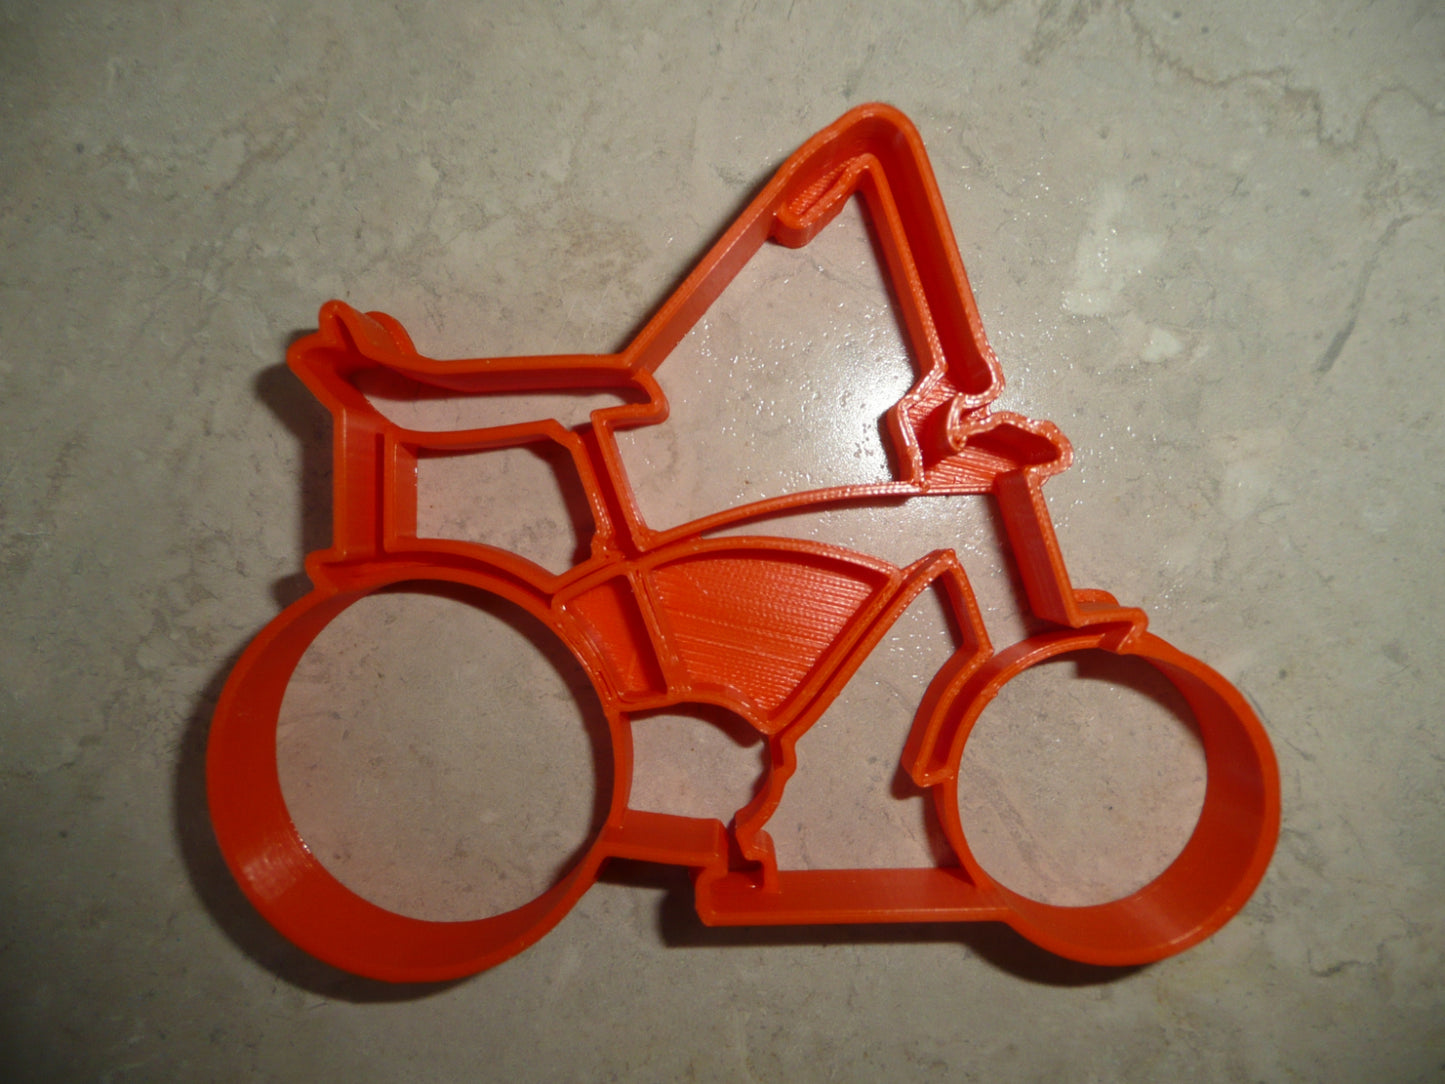 Schwinn Stingray Style Banana Seat Bike Bicycle Cookie Cutter Made In USA PR4918